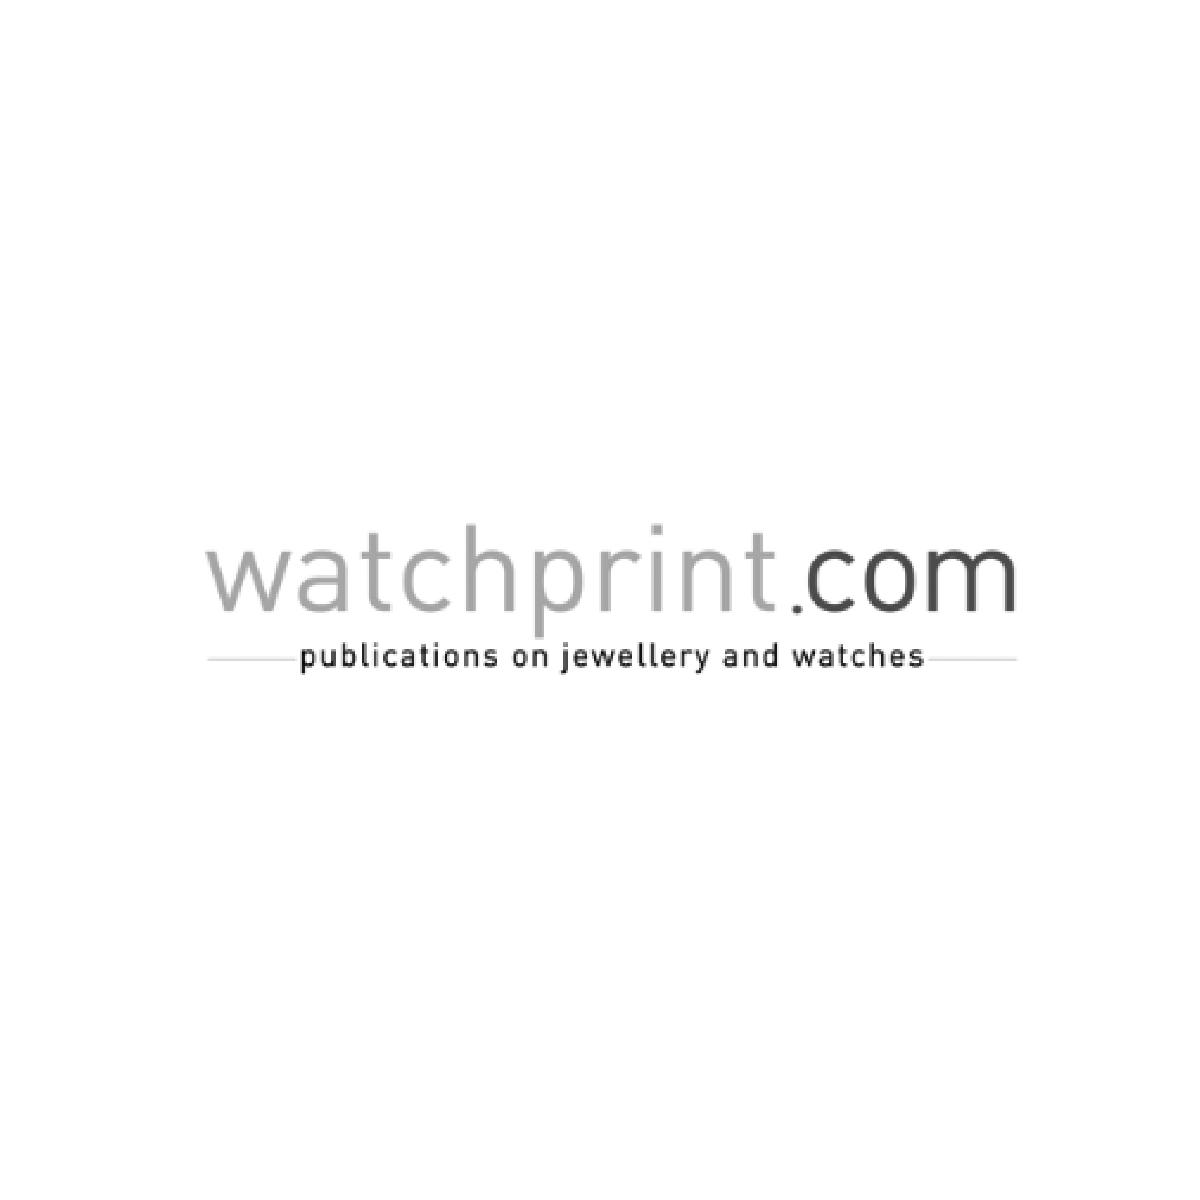 Logo_Watchprint